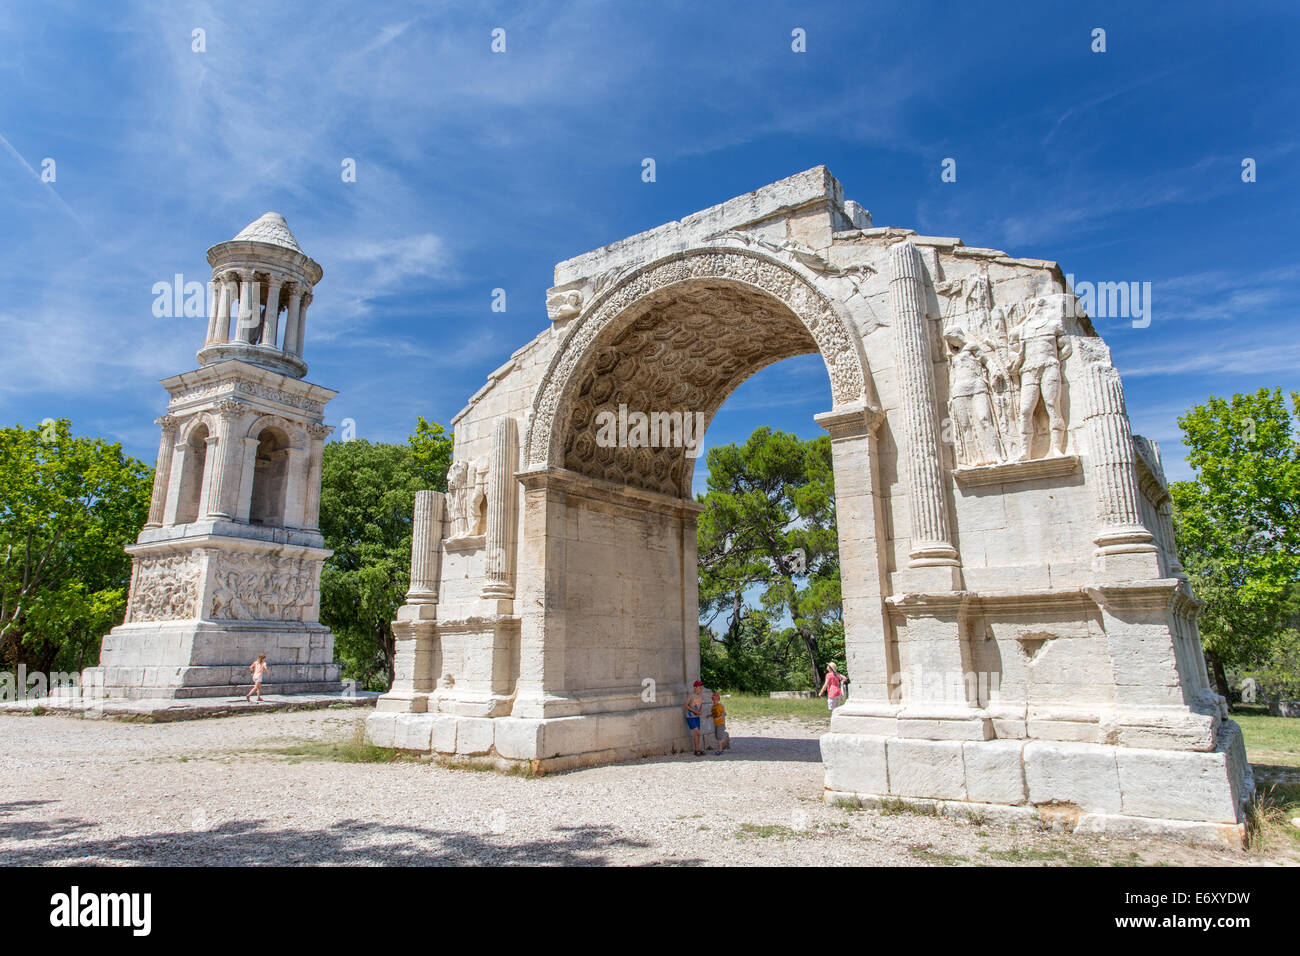 Mausoleum and triumphal arch at Glanum Roman city ruins at St. Remy de Provence, Provence, France Stock Photo